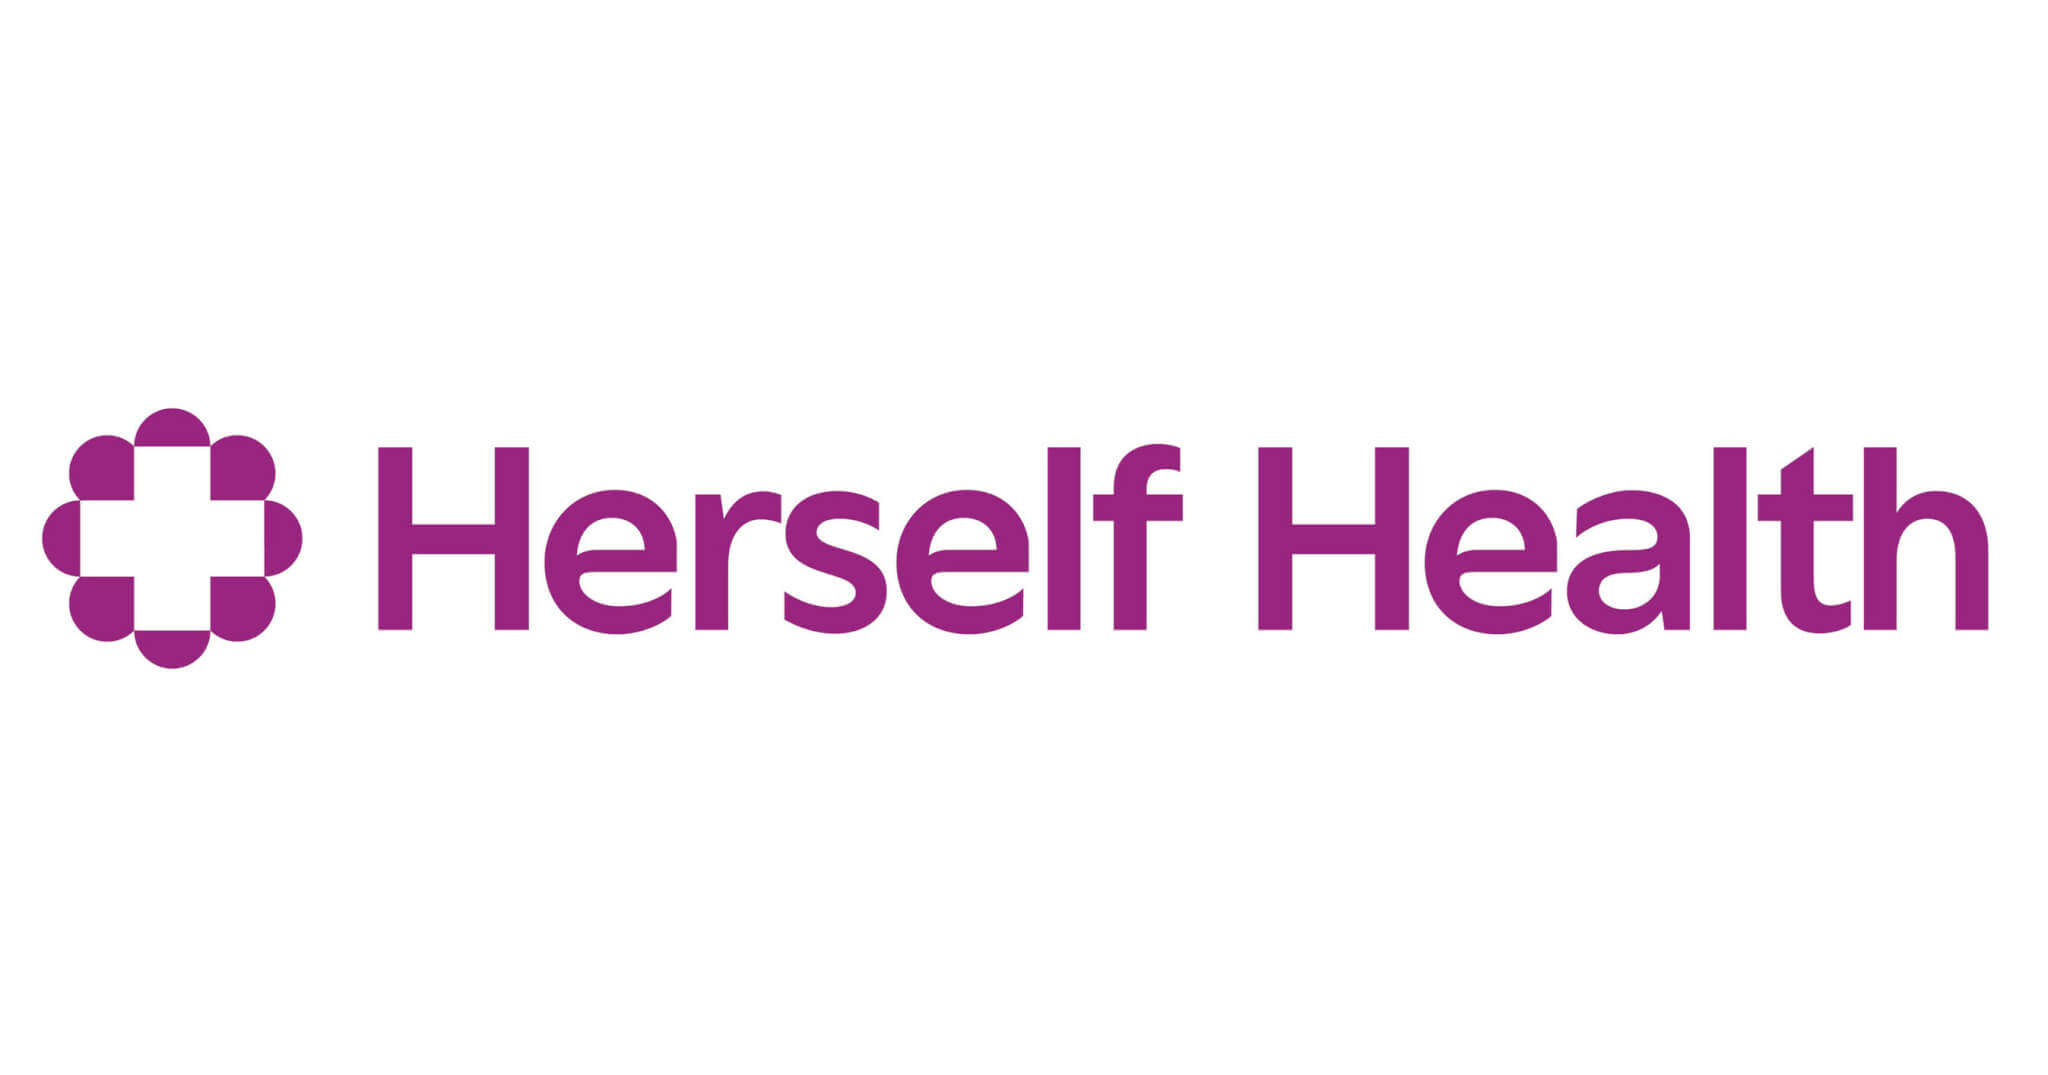 Herself Health logo